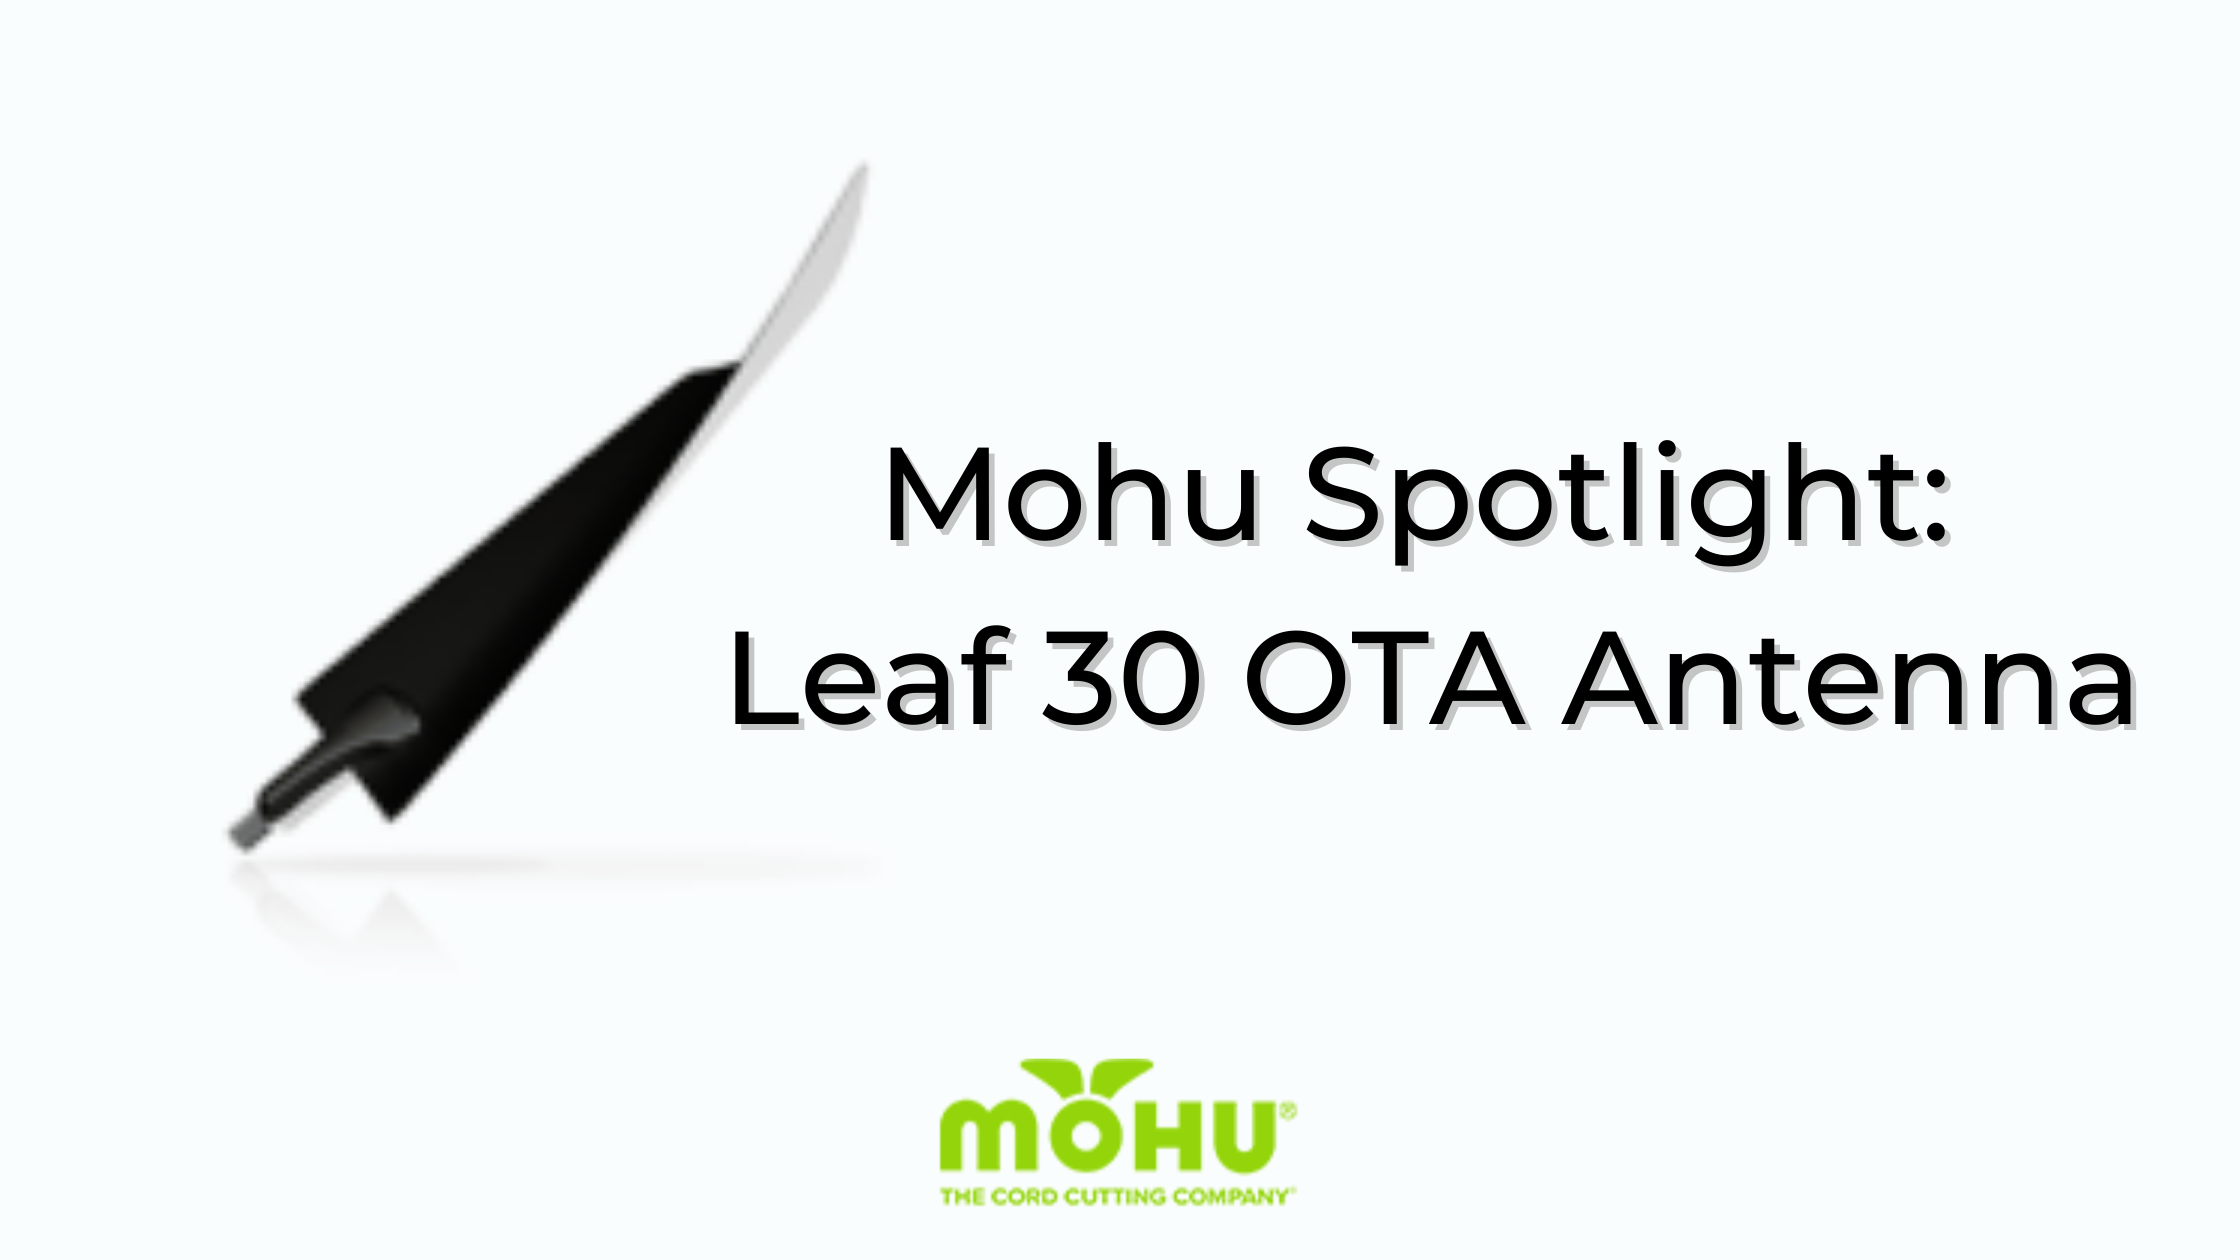 Mohu Leaf 30 antenna, Mohu Spotlight: Leaf 30 OTA Antenna